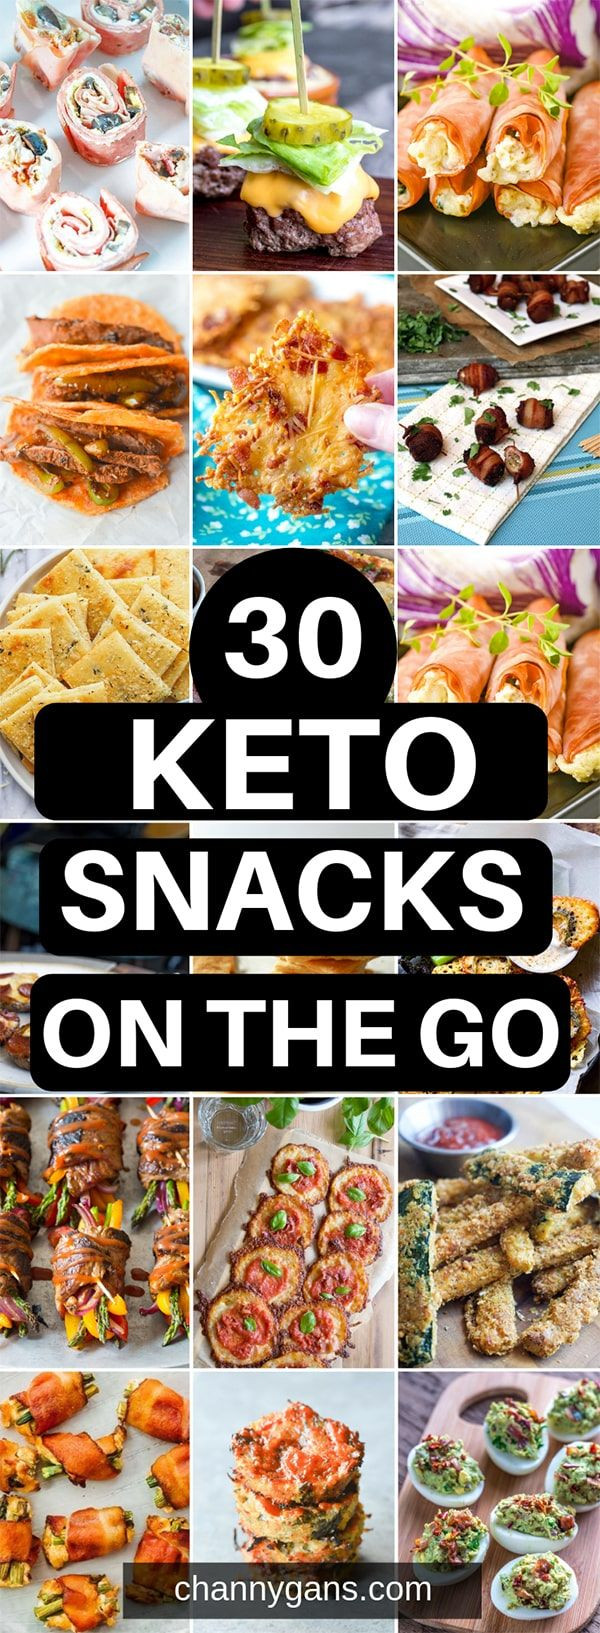 Vegetarian Keto Snacks On The Go
 30 Keto Snacks The Go